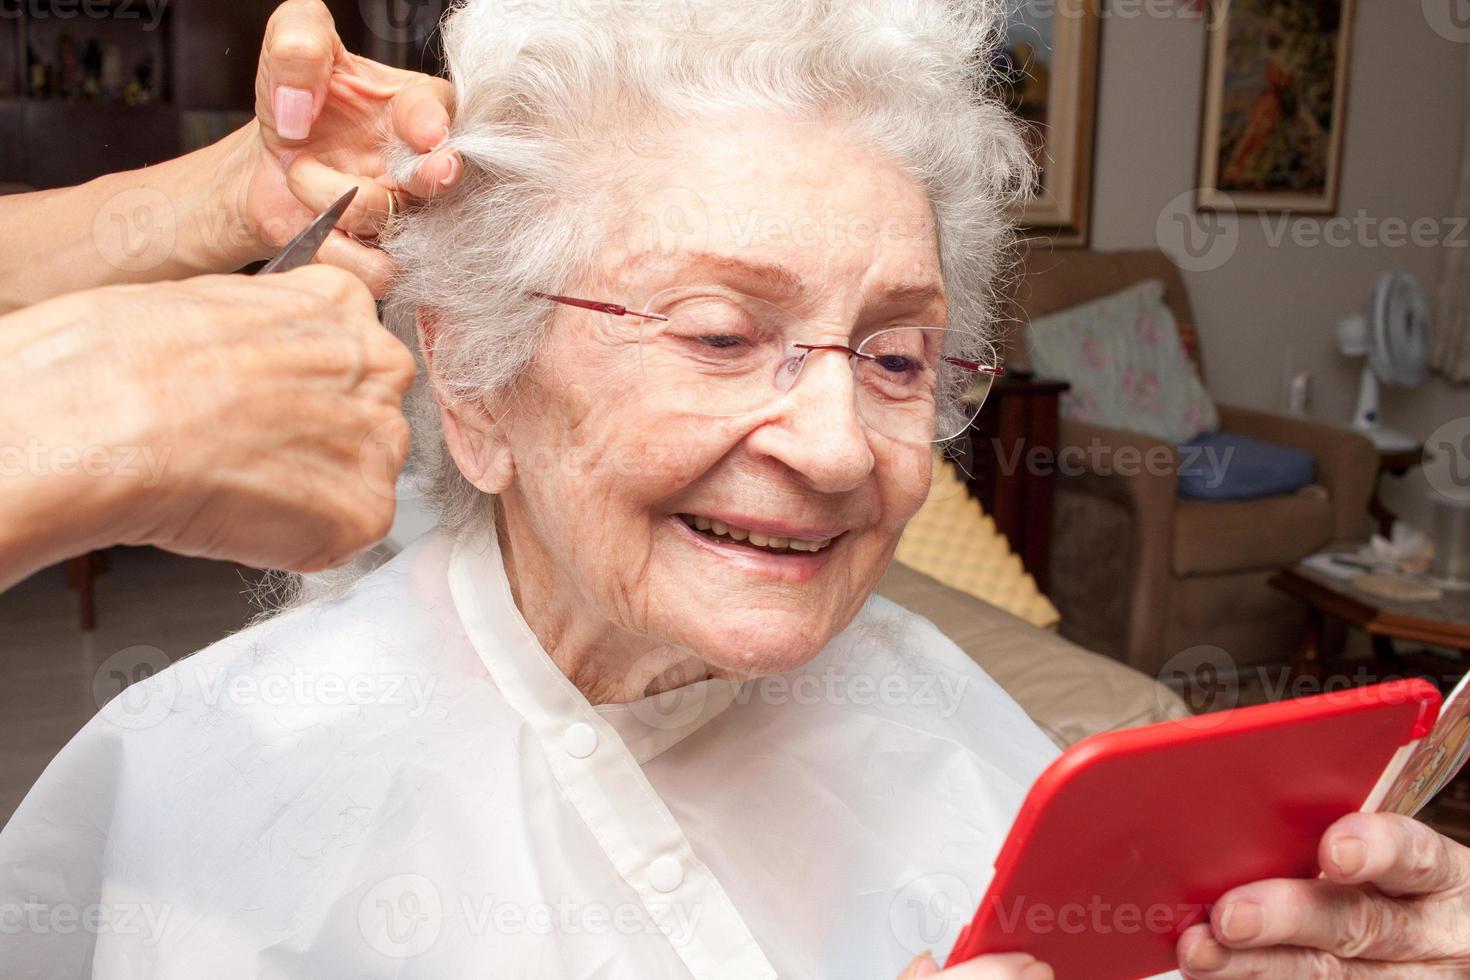 senhora idosa cortando o cabelo no conforto de sua casa foto